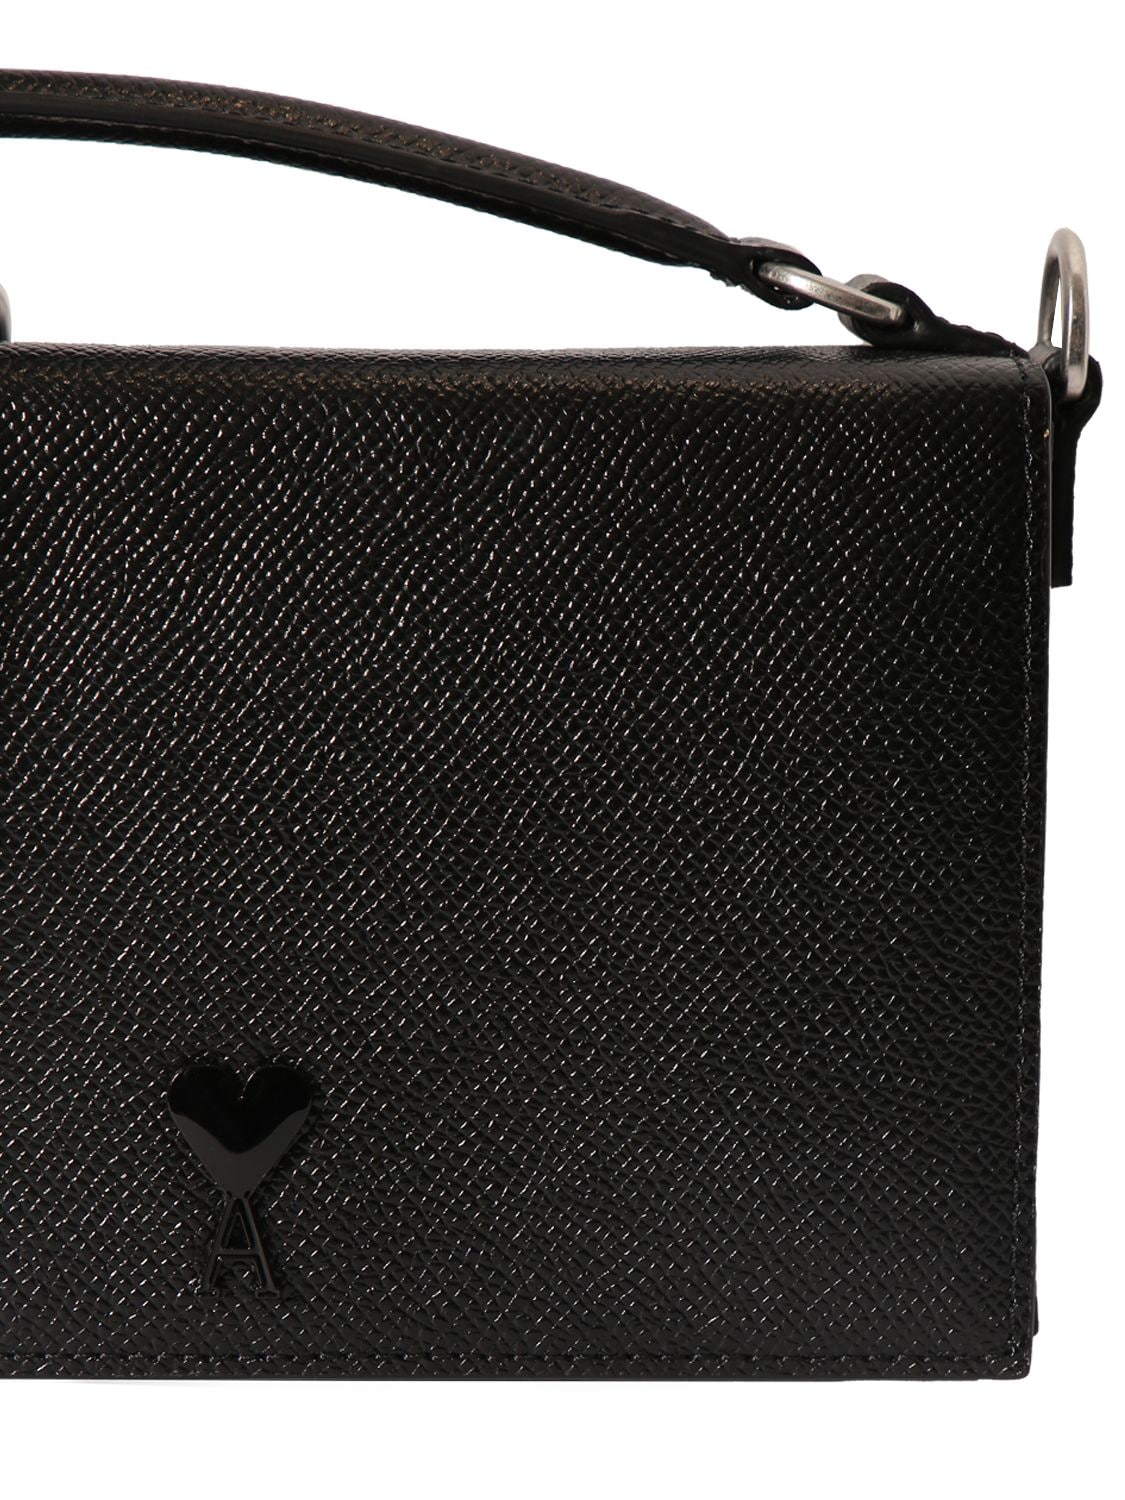 Sac Lunch Box Leather Shoulder Bag in Black - Ami Paris